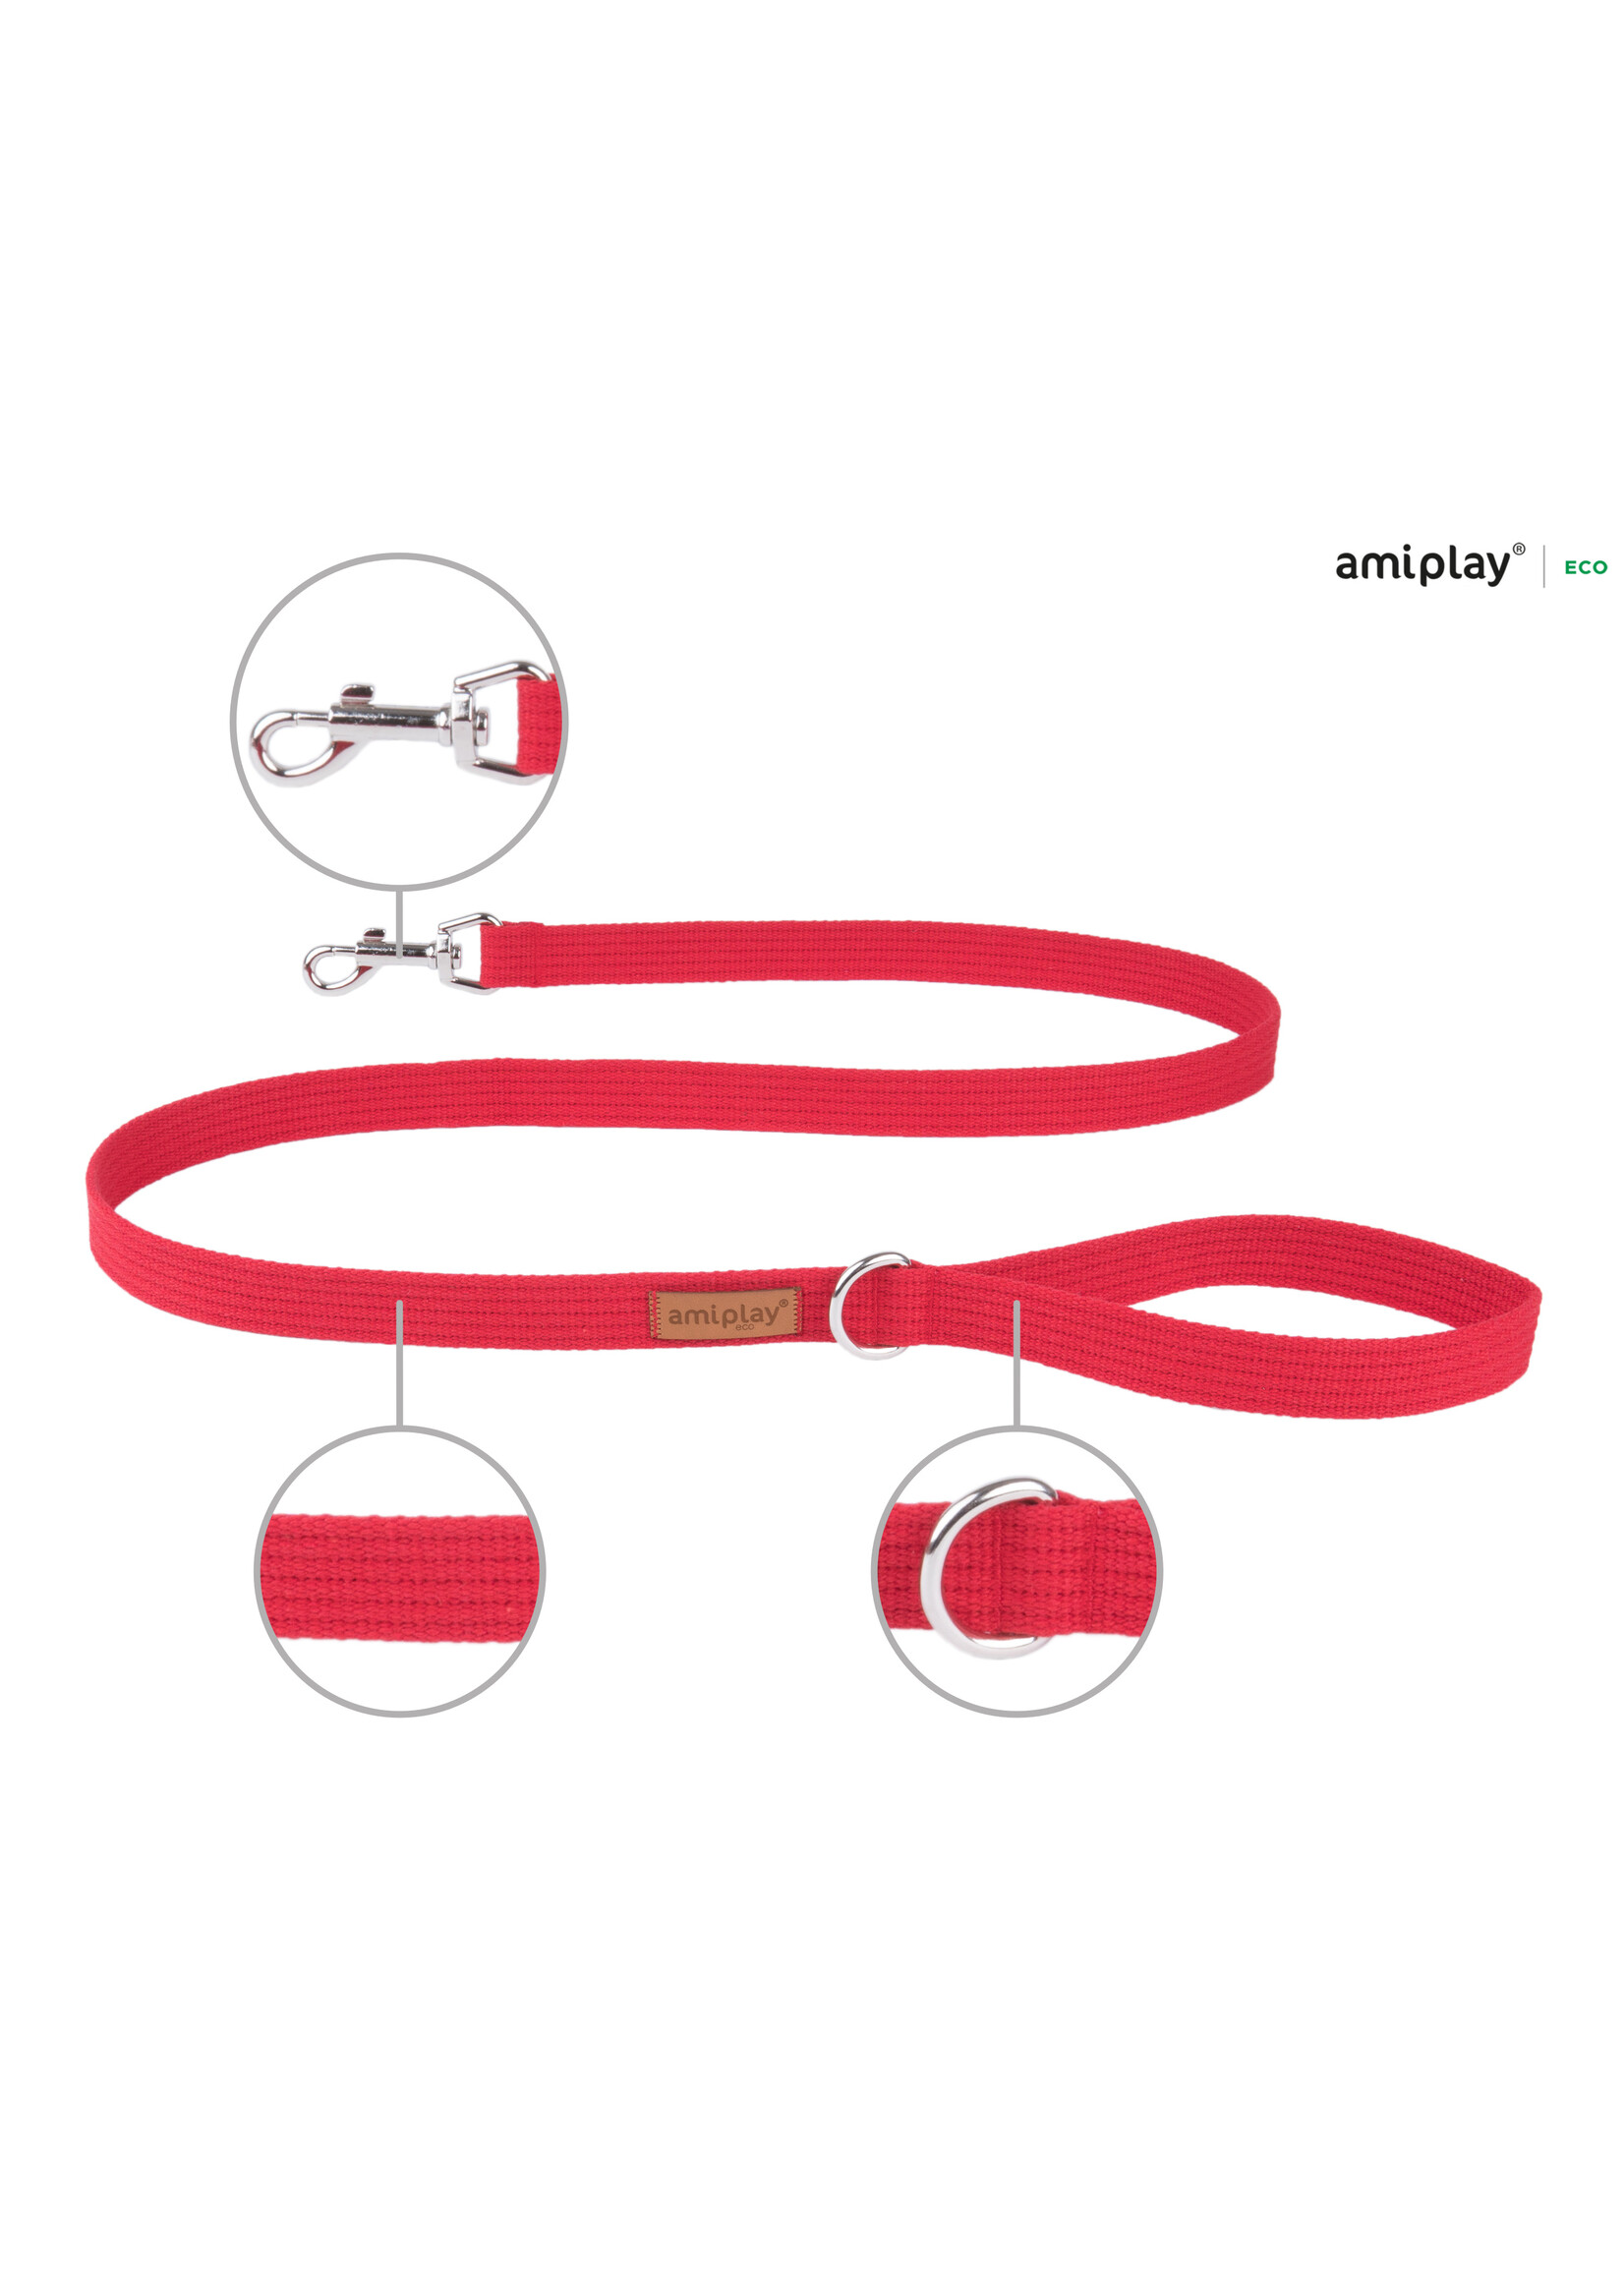 Amiplay Leiband Cotton rood maat-S / 140x1,5cm